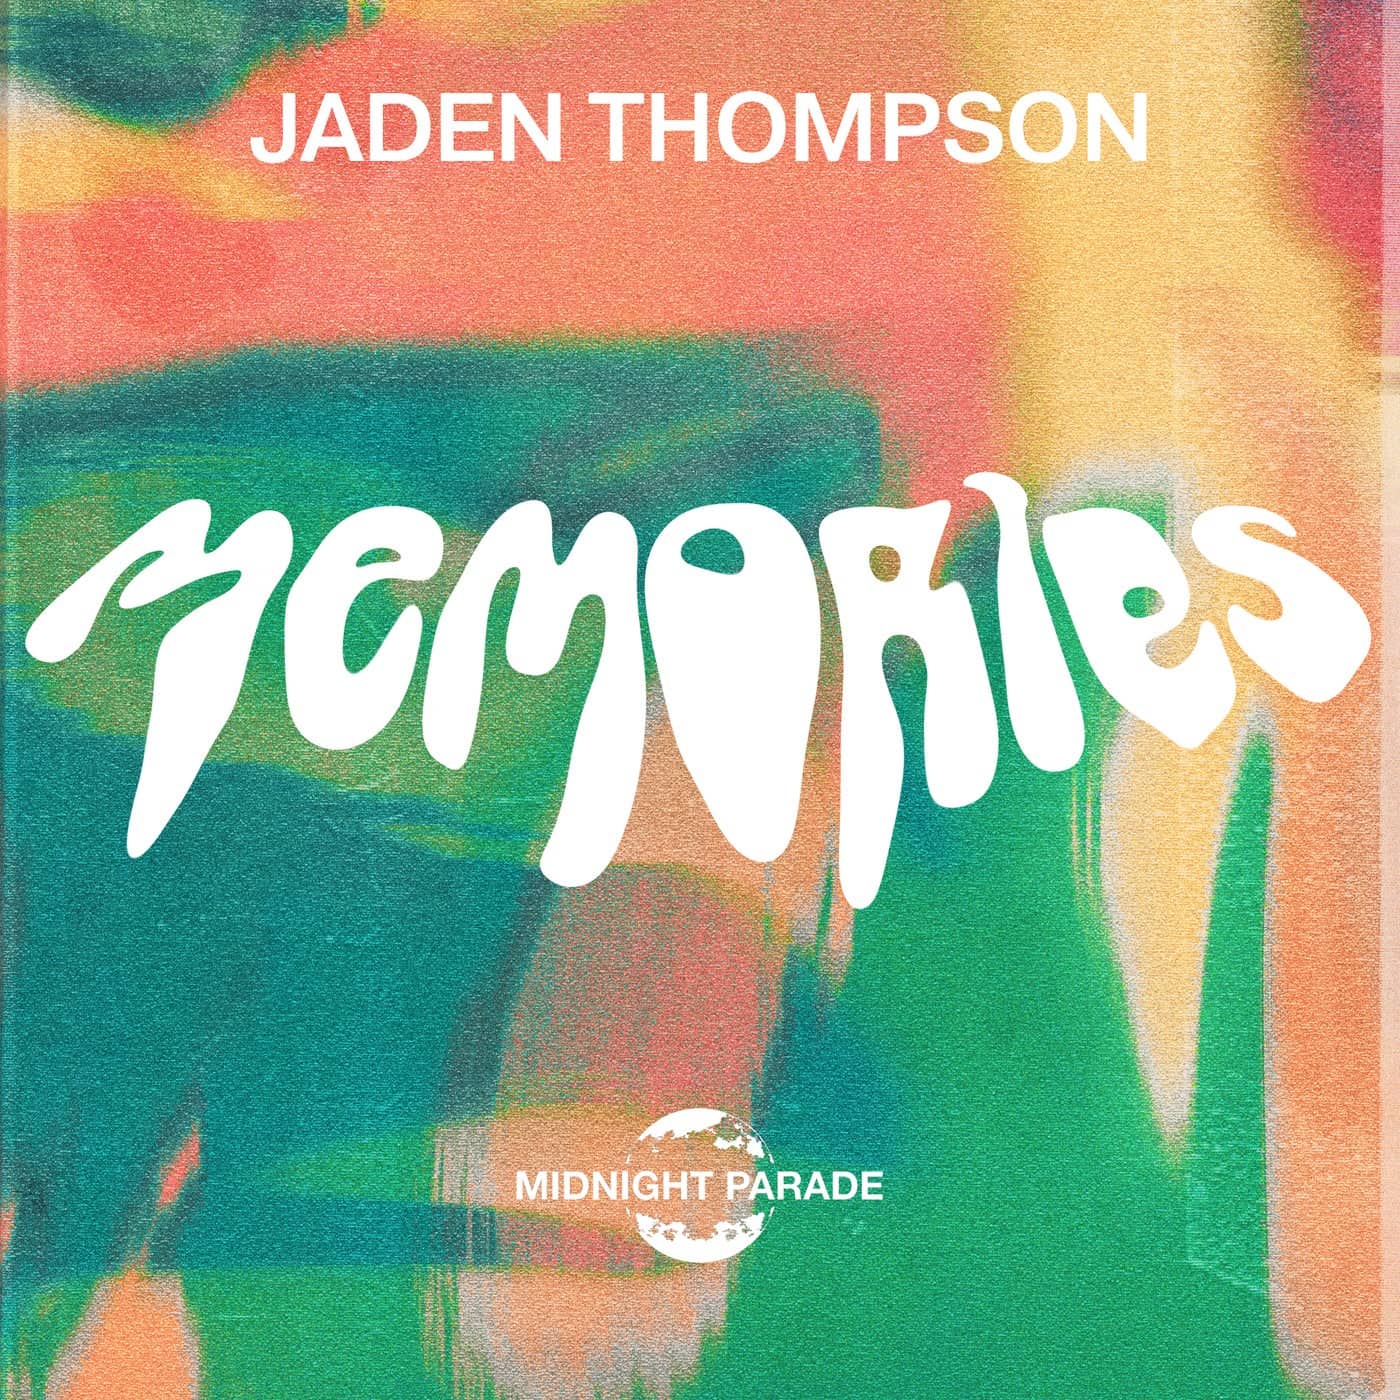 Download Jaden Thompson - Memories on Electrobuzz